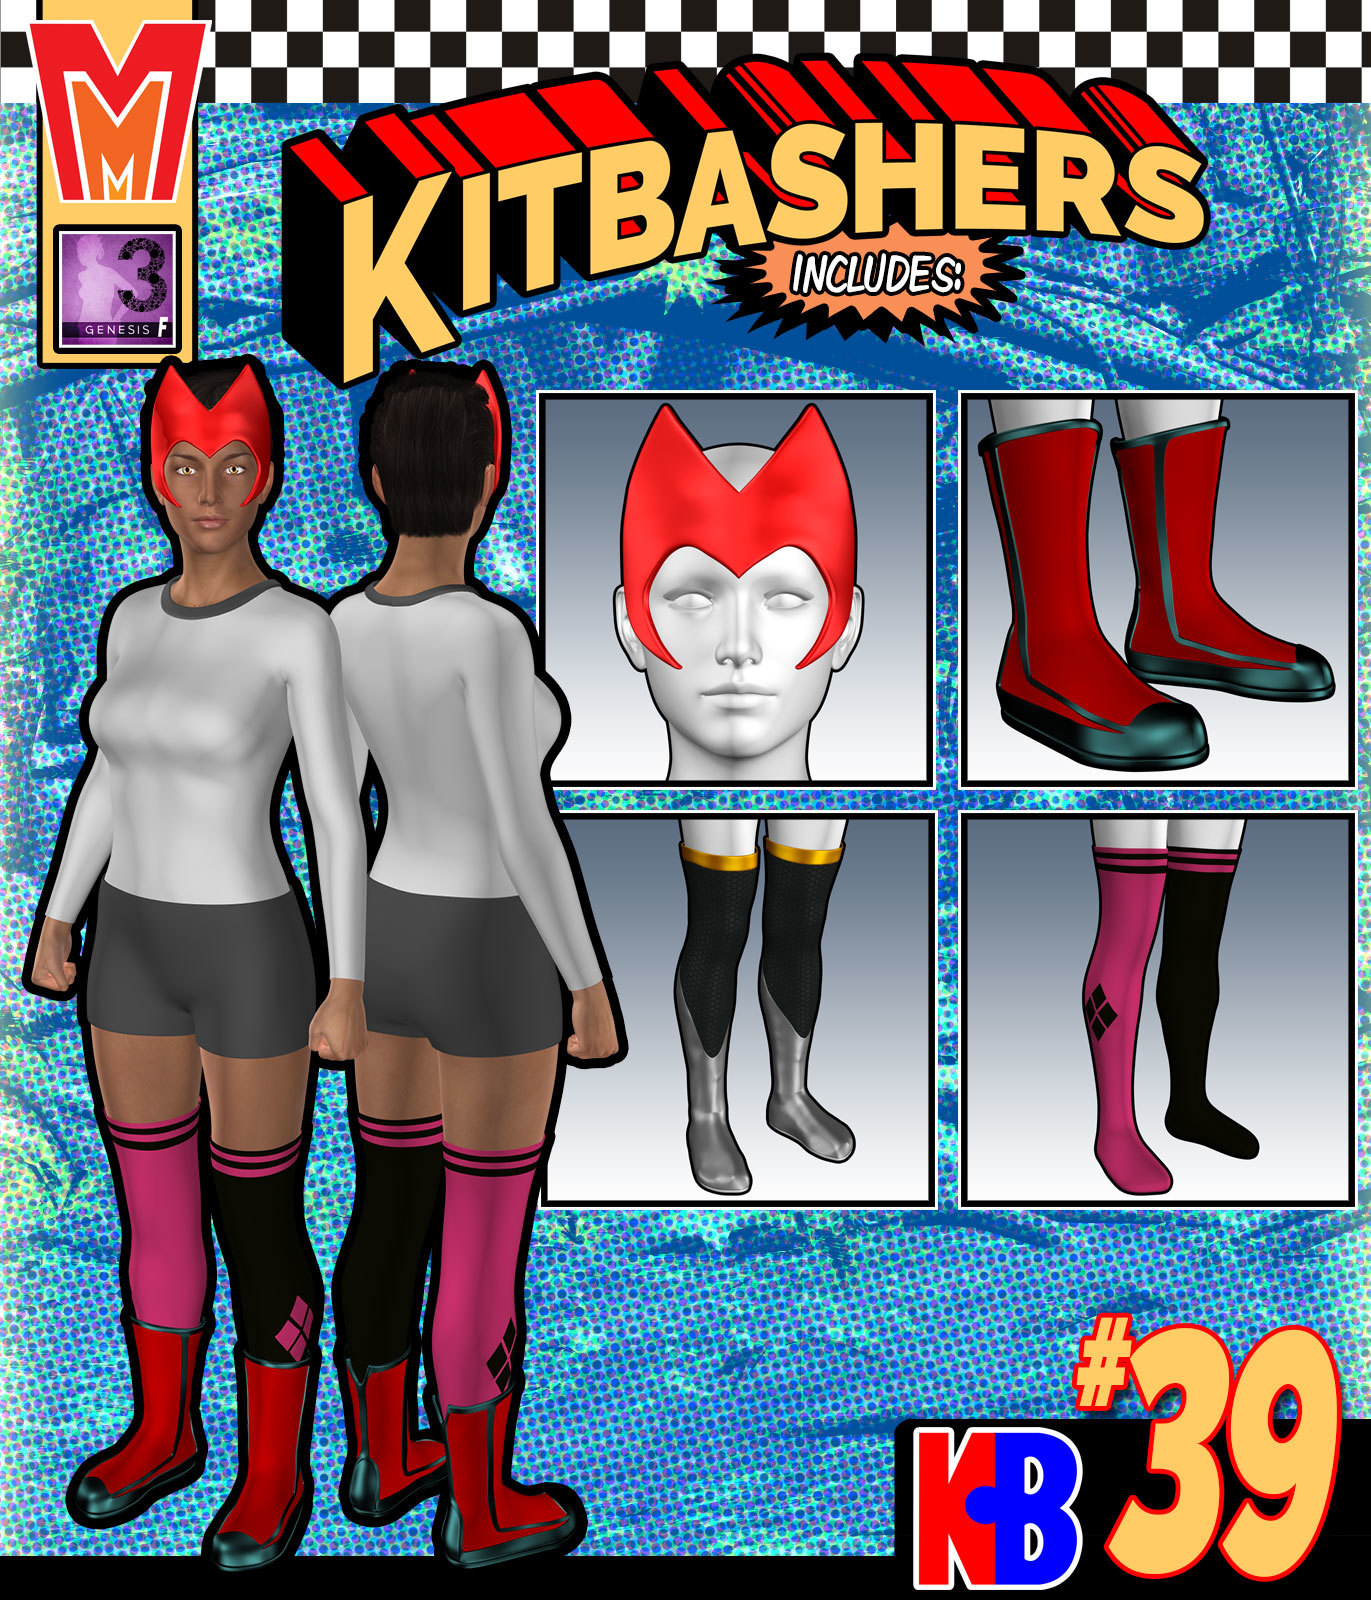 Kitbashers 039 MMG3F by: MightyMite, 3D Models by Daz 3D